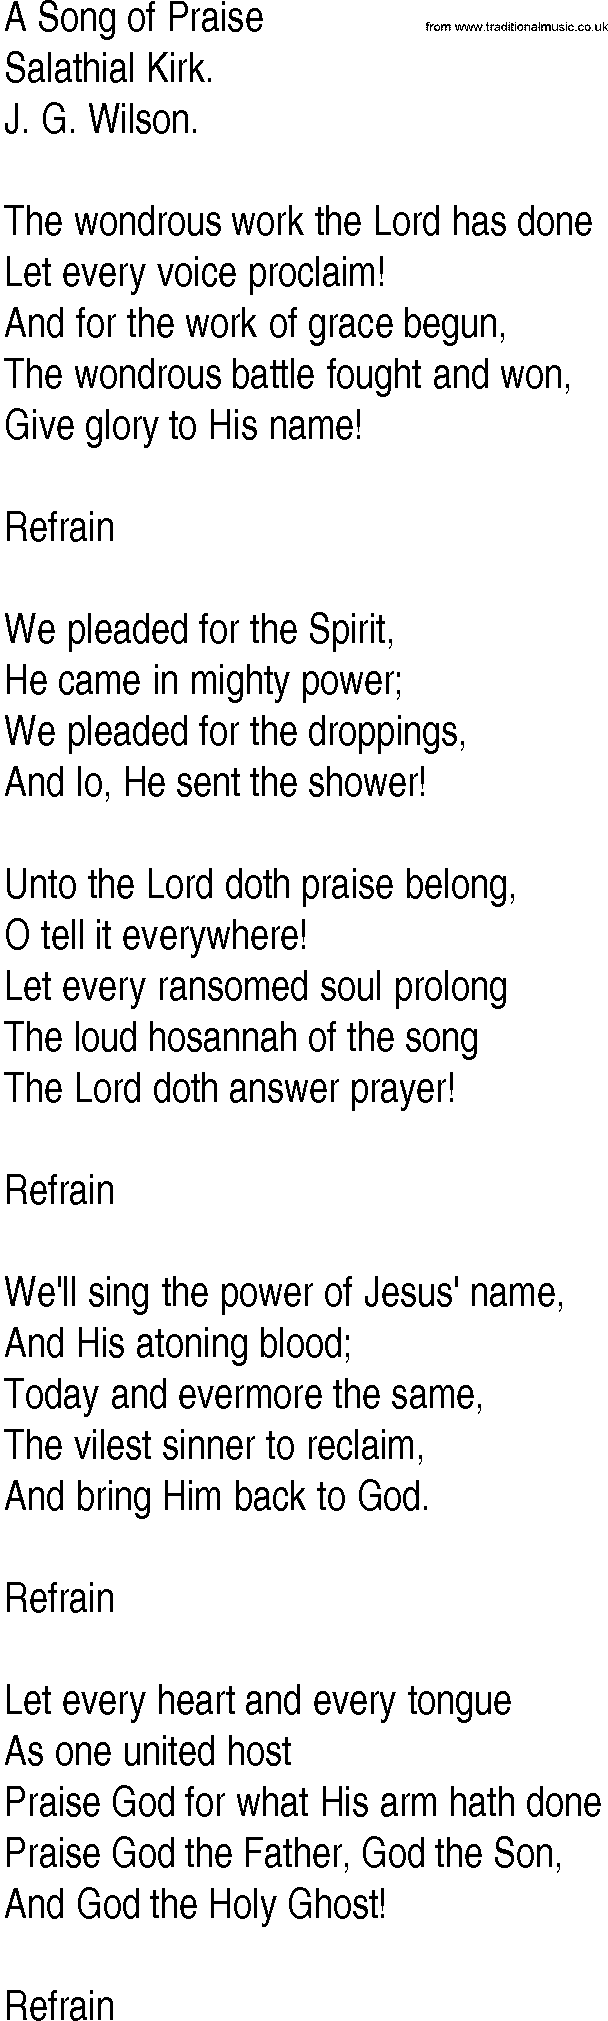 Hymn and Gospel Song: A Song of Praise by Salathial Kirk lyrics